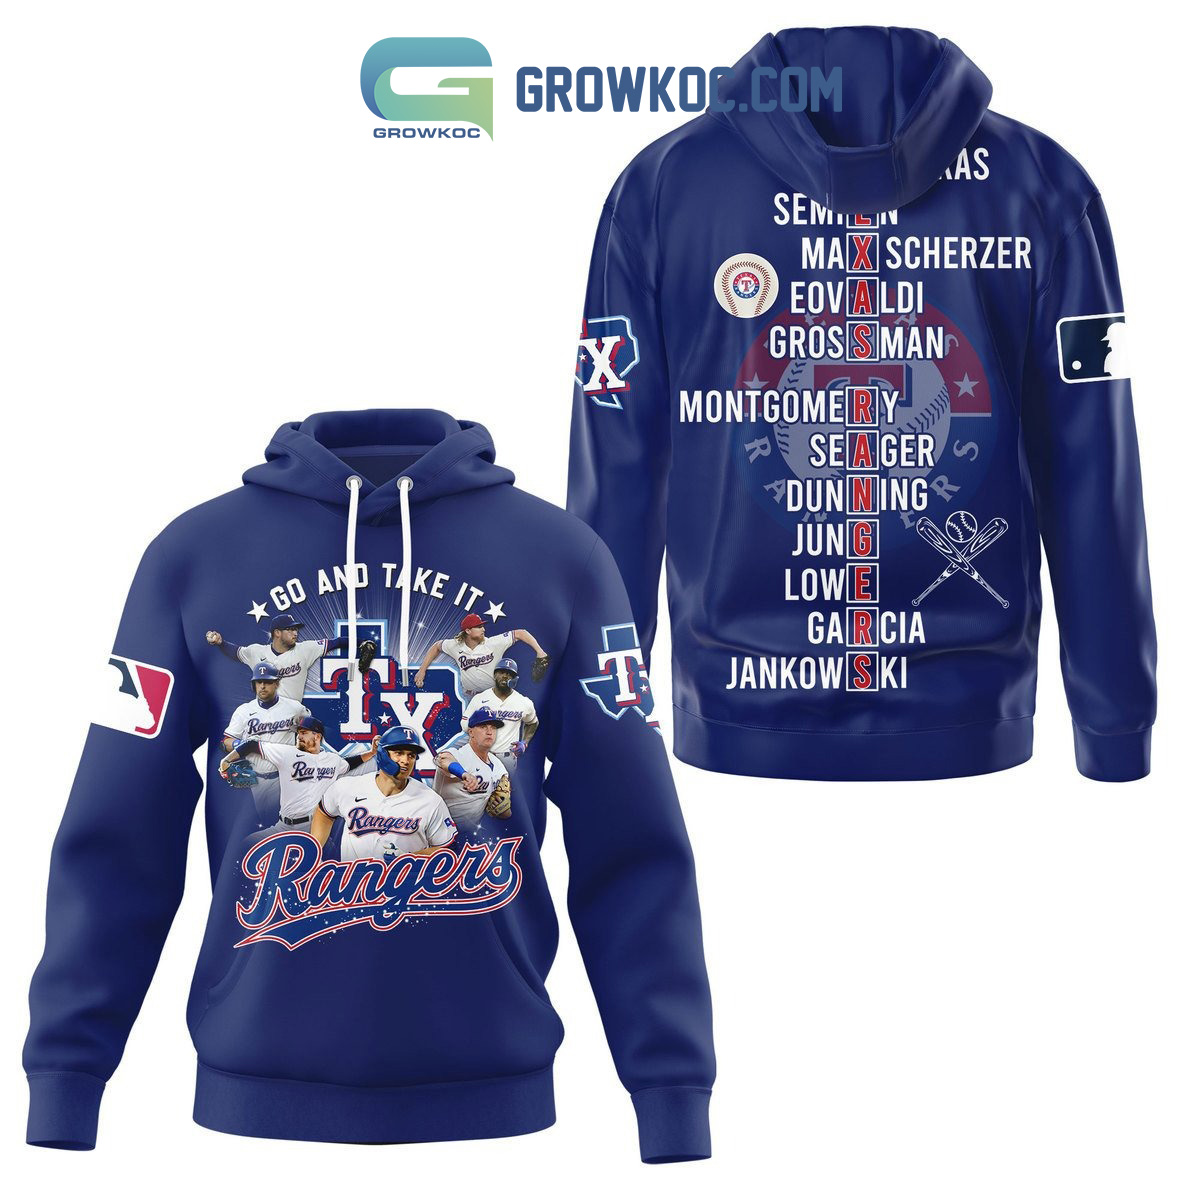 Texas Rangers MLB Personalized Hunting Camouflage Hoodie T Shirt - Growkoc